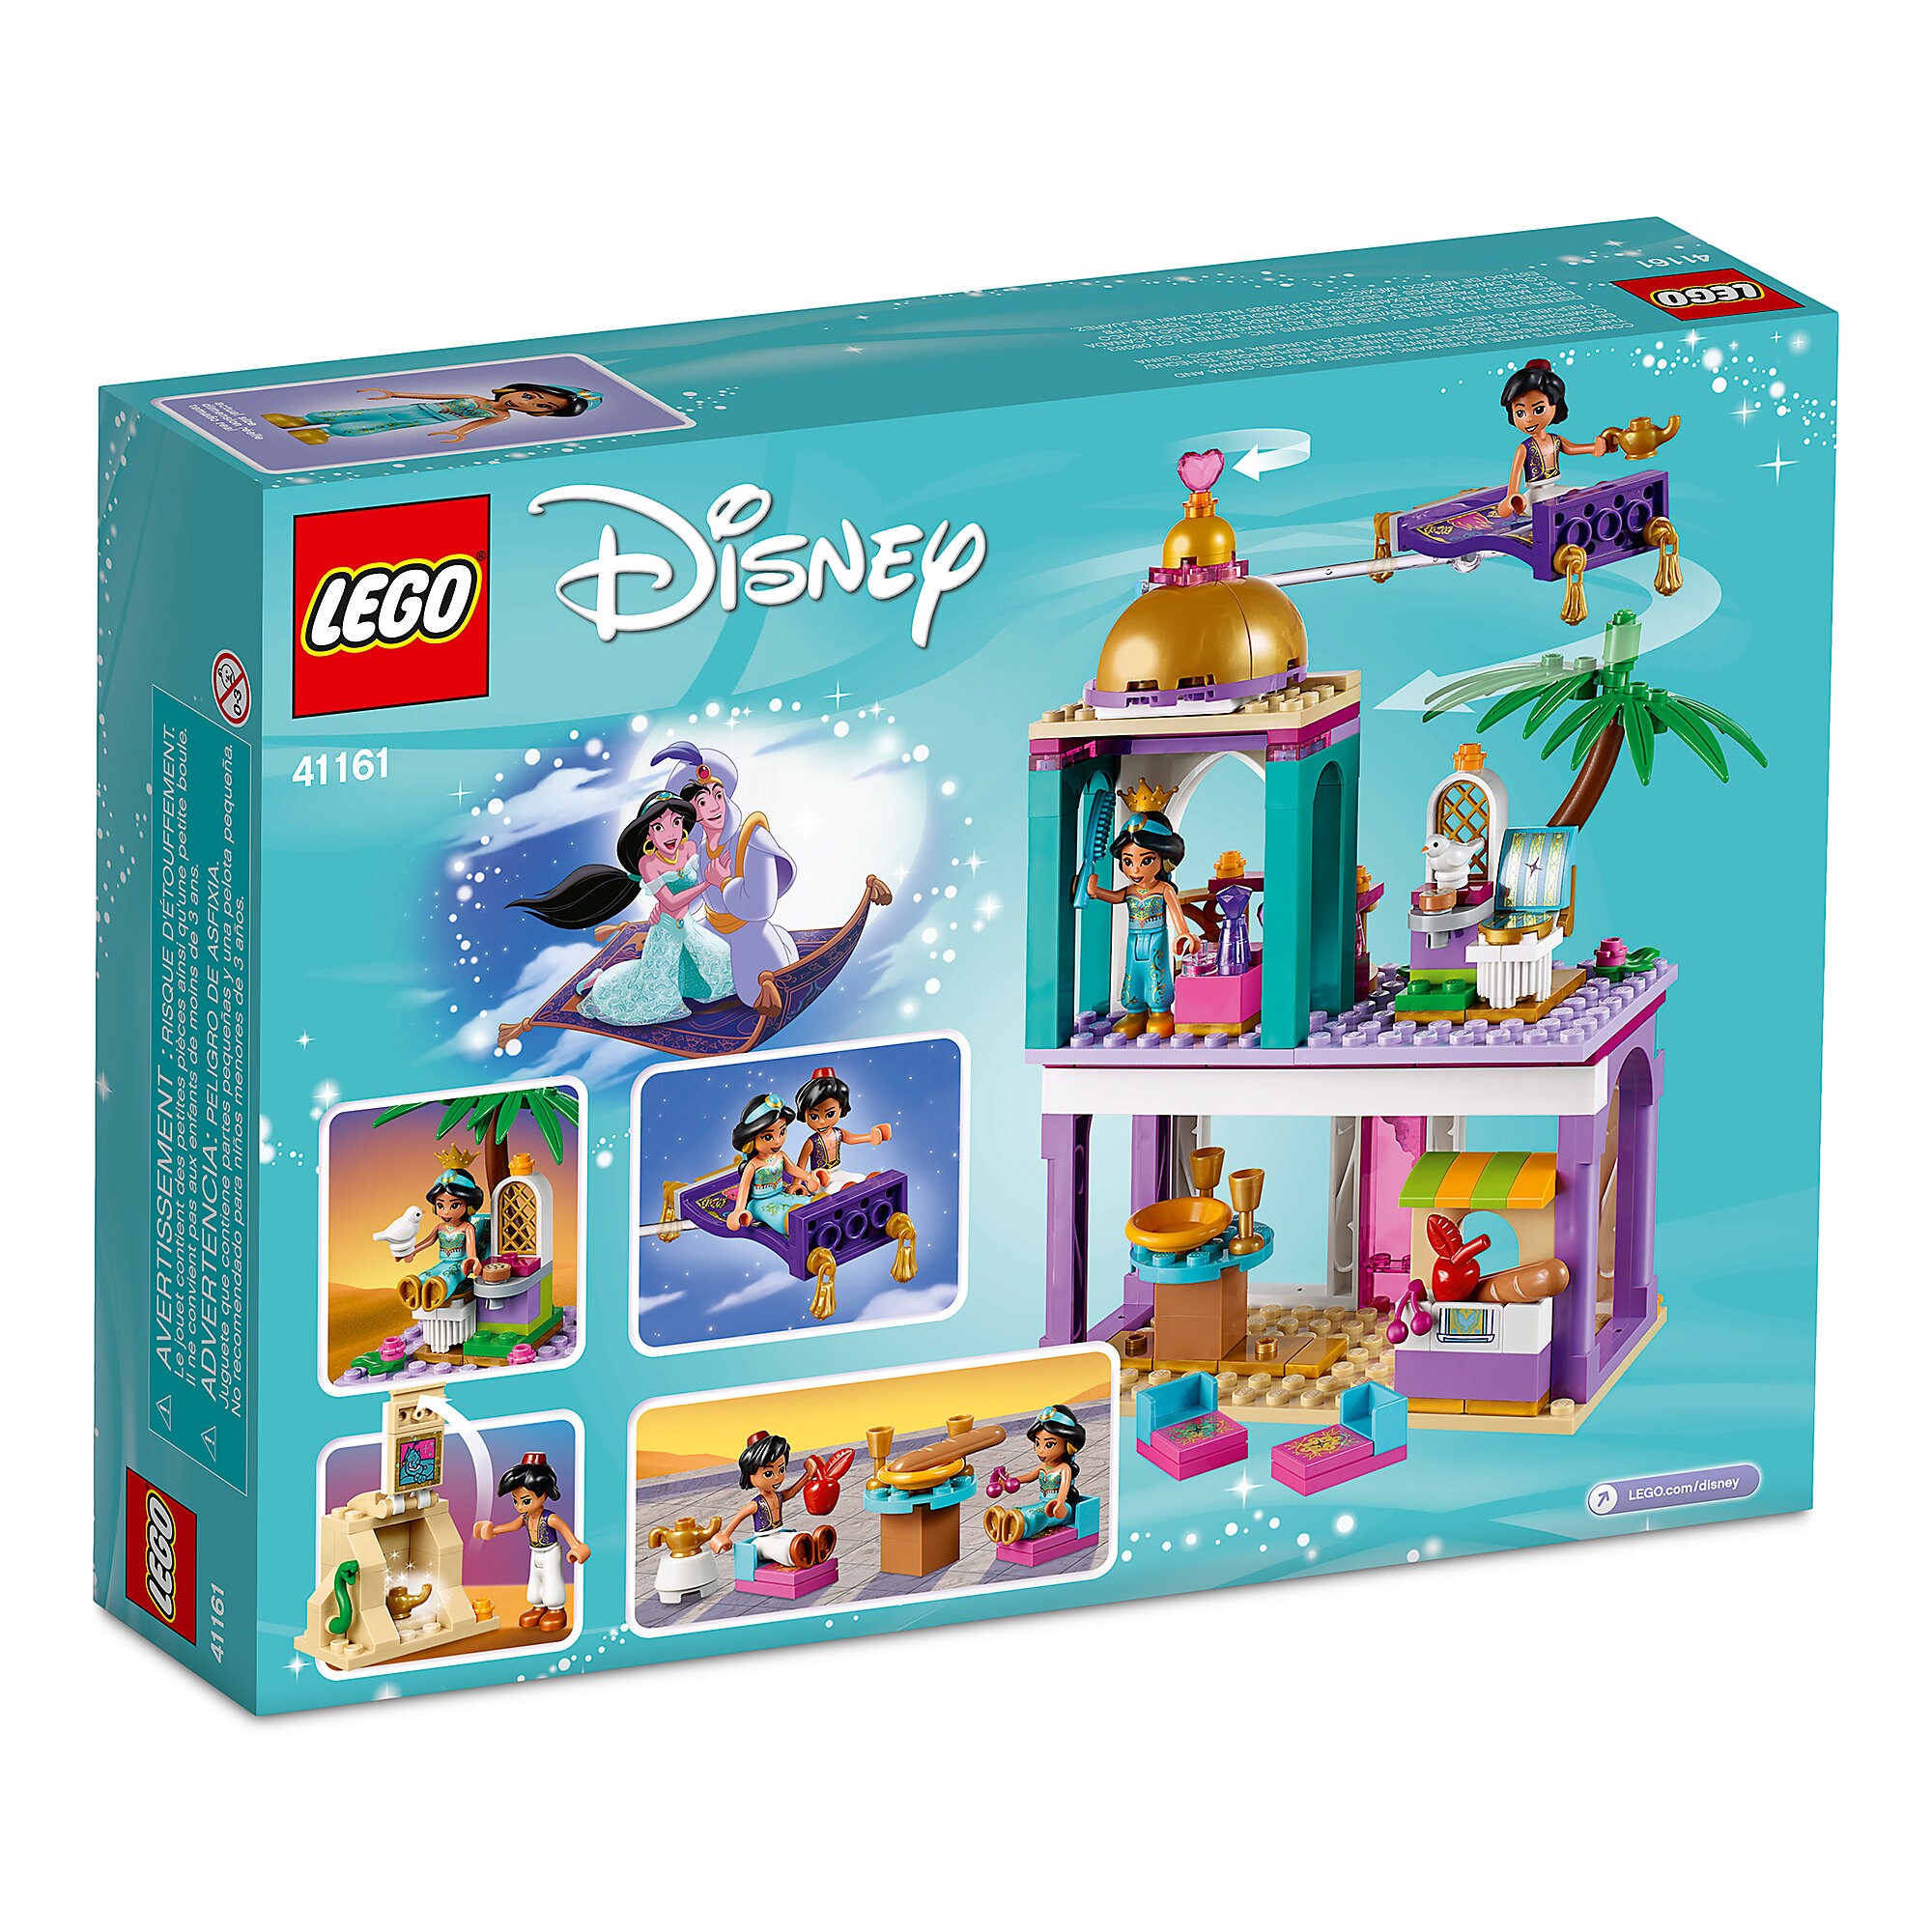 Aladdin and Jasmine's Palace Adventures Playset by LEGO